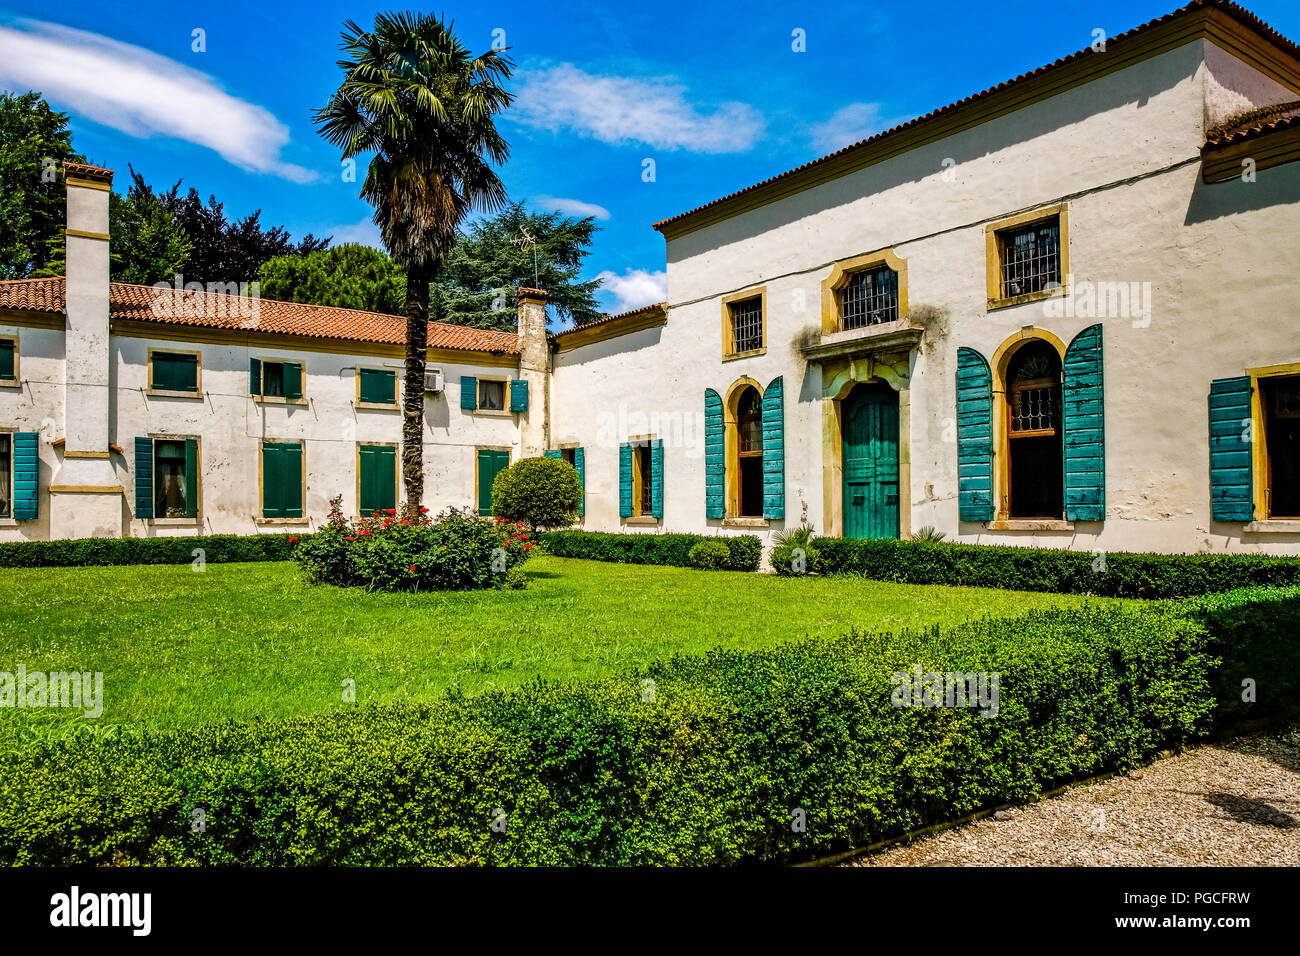 Italia Veneto Mira: Villa Barchessa Valmanara: paek, giardino e sul retro della villa Foto Stock